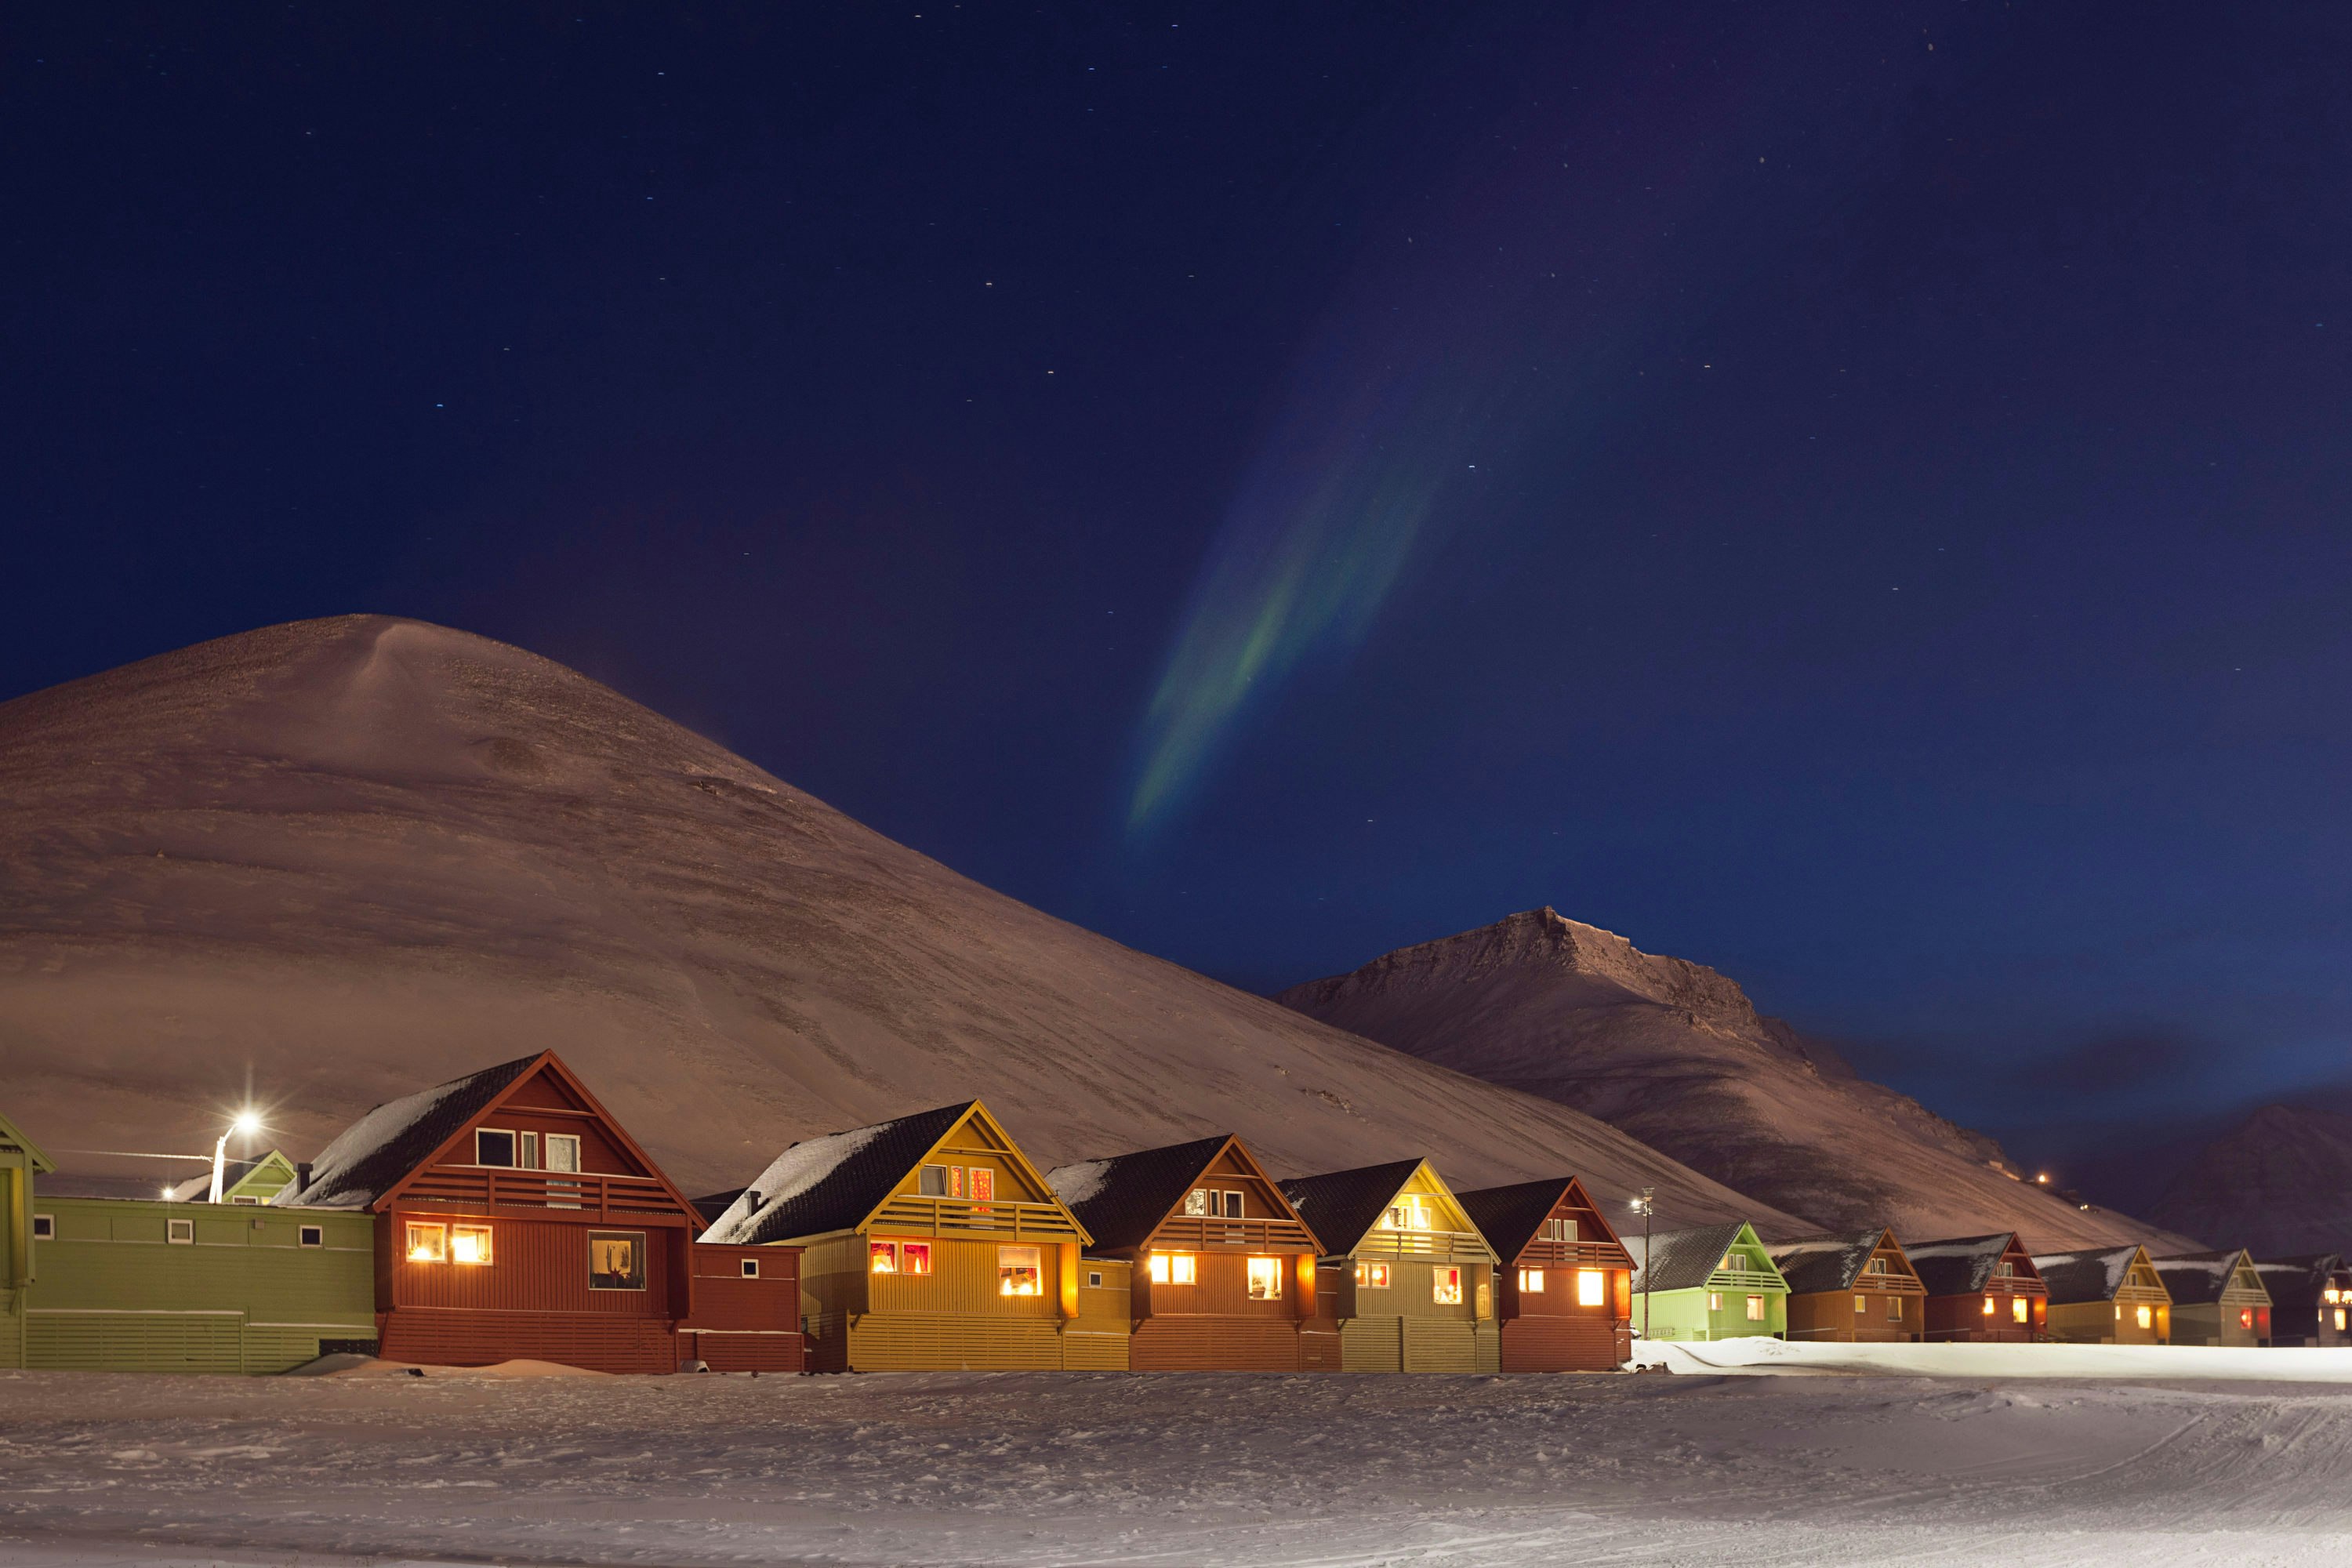 Travel News - @ Hanne FeylingHurtigruten Svalbard